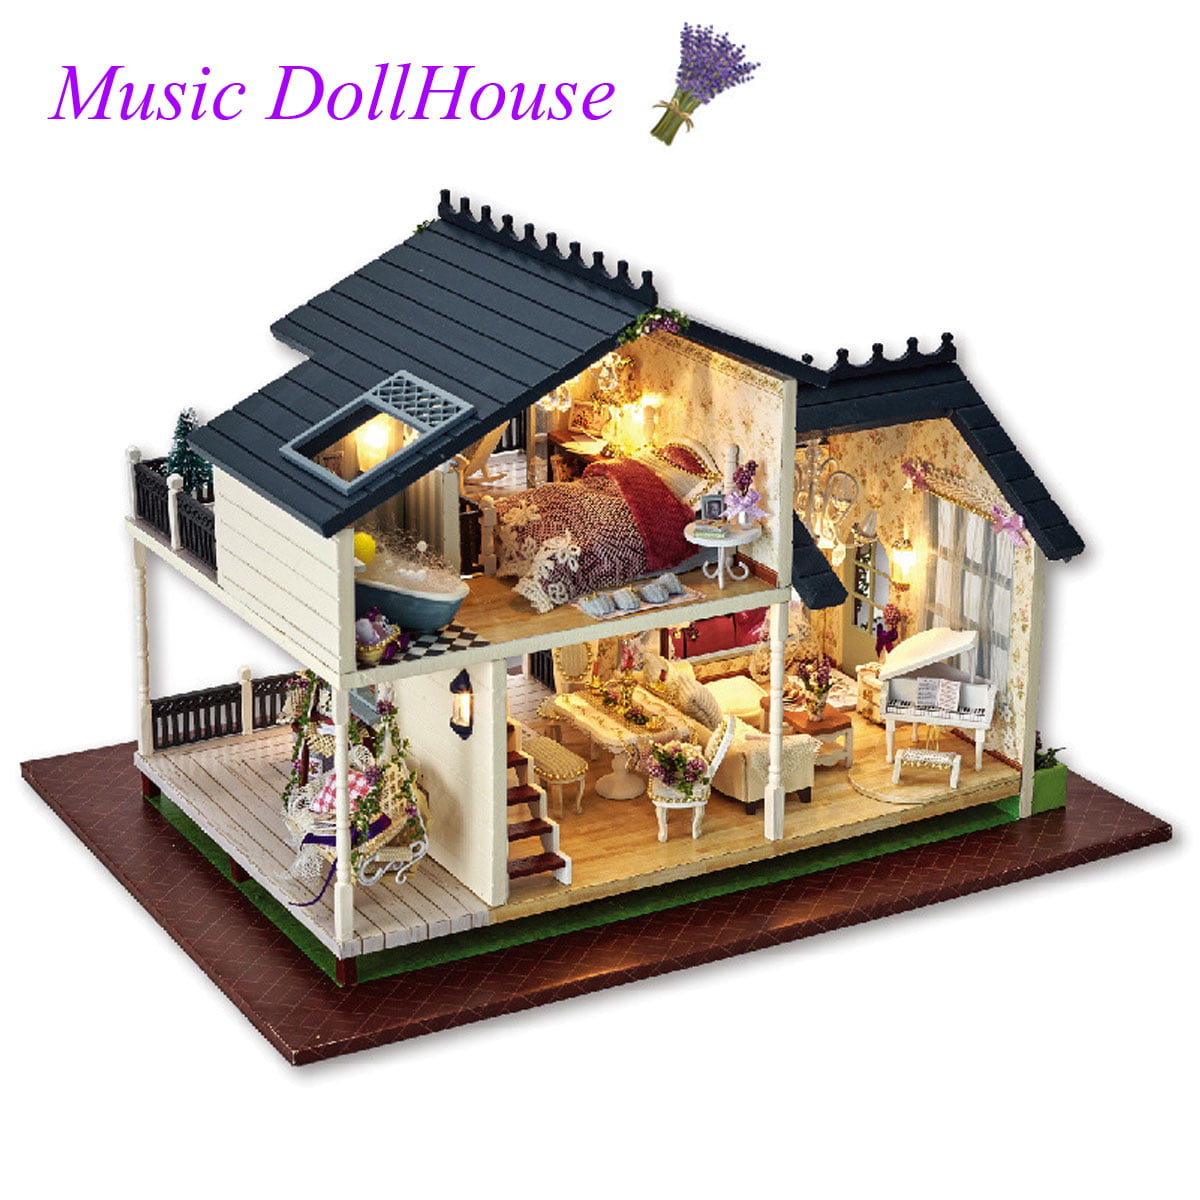 Miniature dolls house pork leg